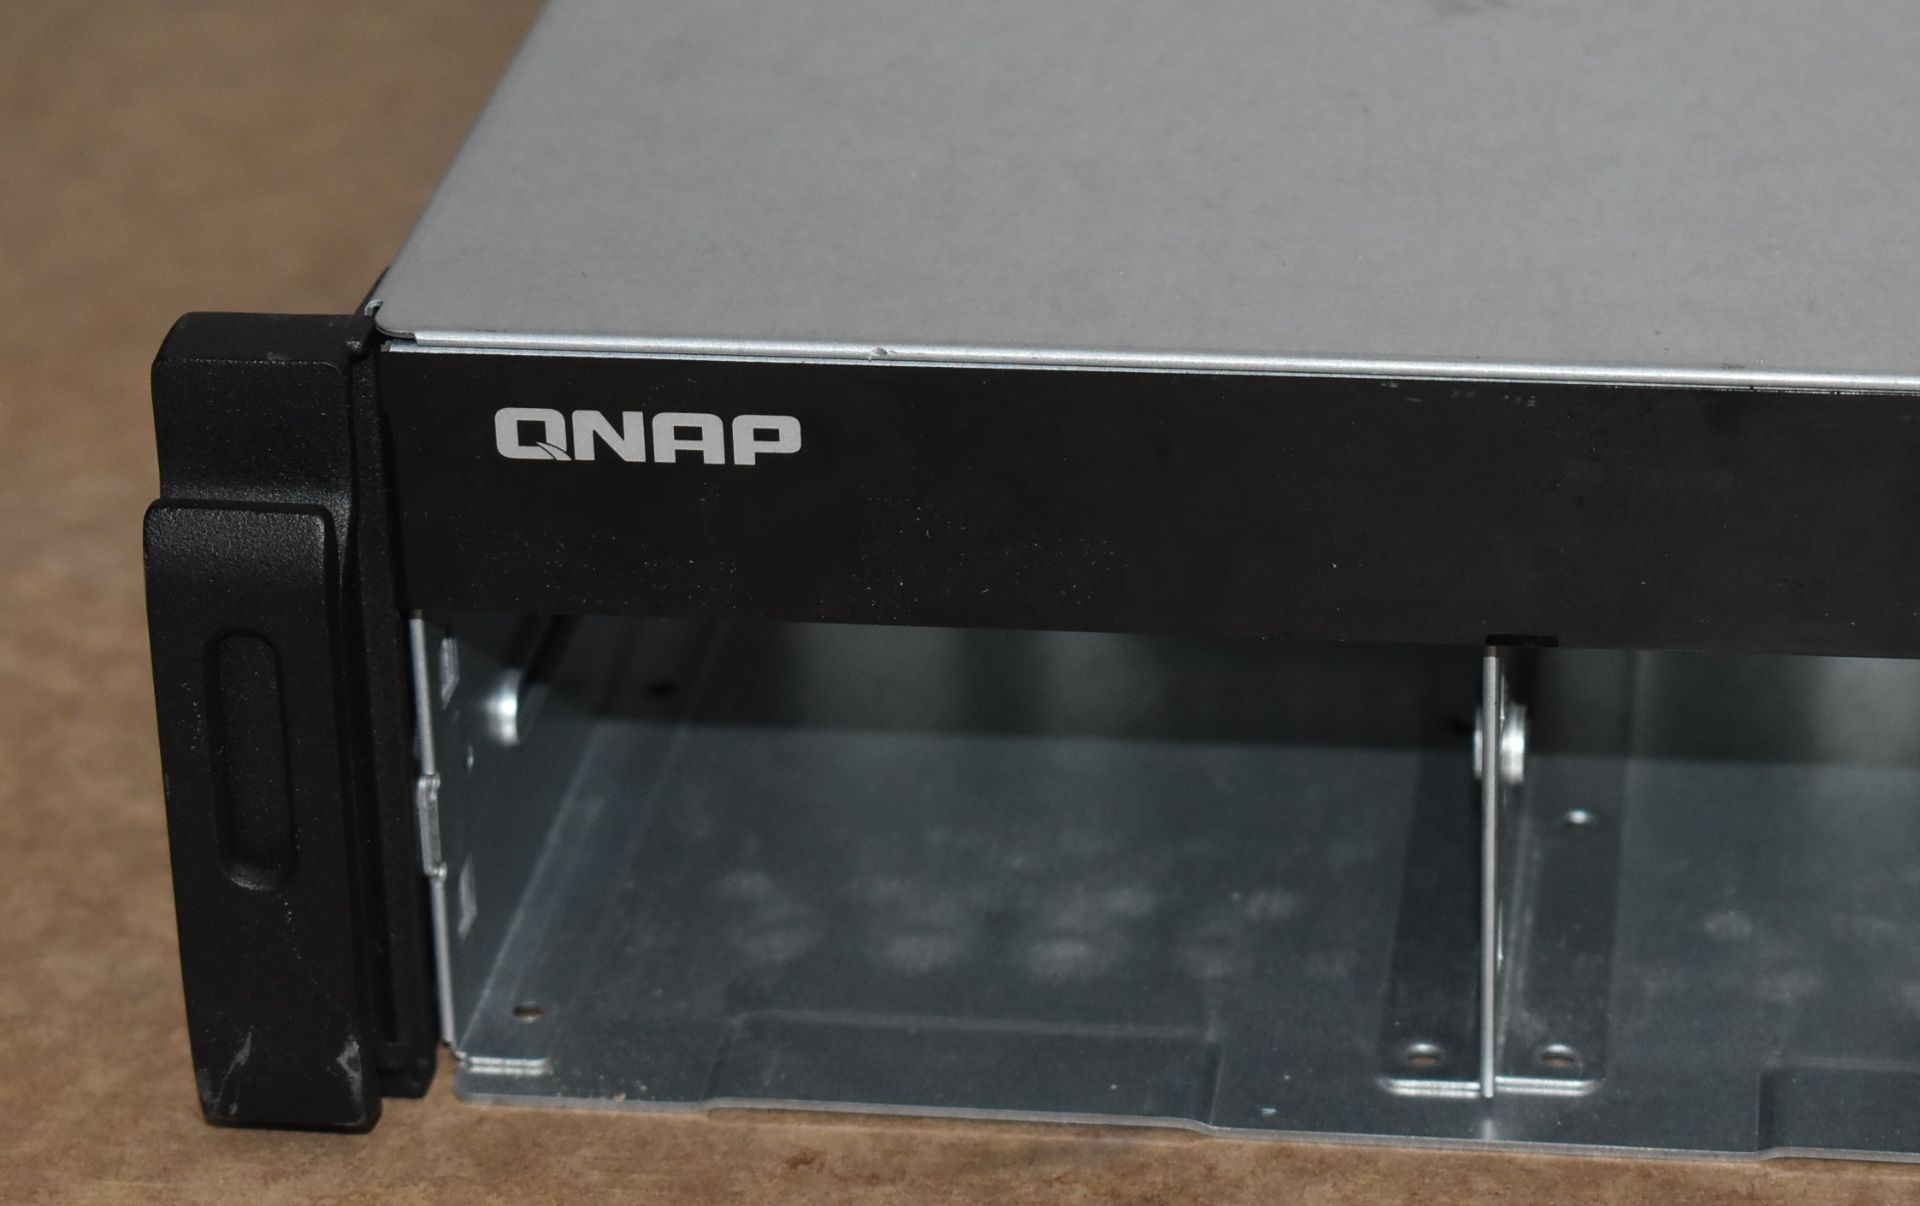 1 x QNAP 8 Bay 2u NAS Storage Device - Model TS-879U-RP - RRP £1,500 - Ref: MPC176 CA - CL678 - - Image 4 of 11